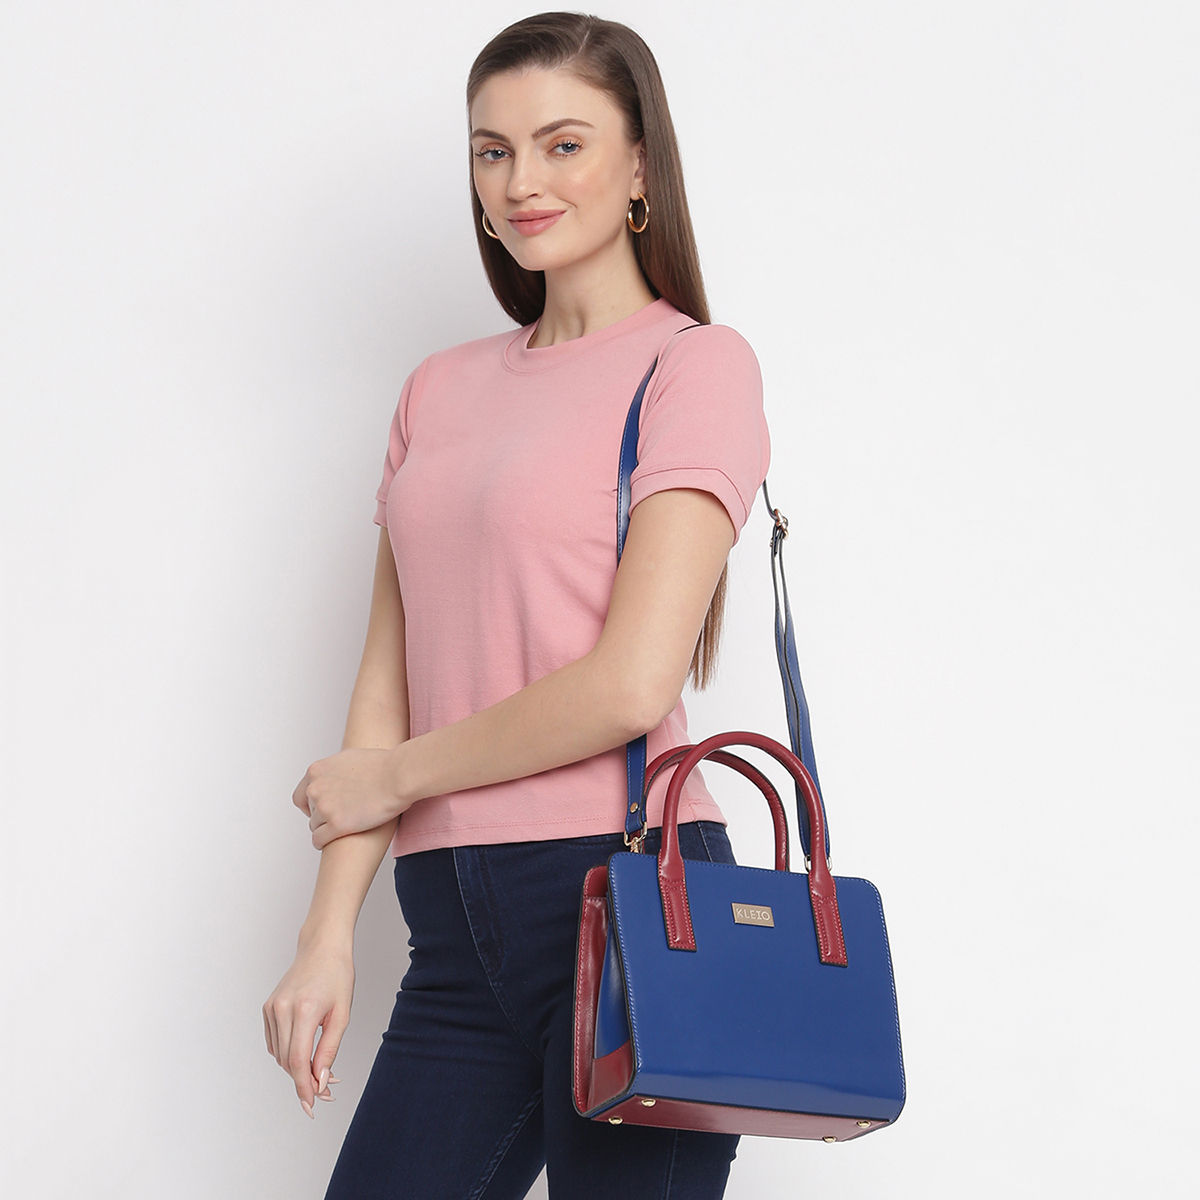 Buy/Send Lino Perros Royal Blue Handbag Online- FNP